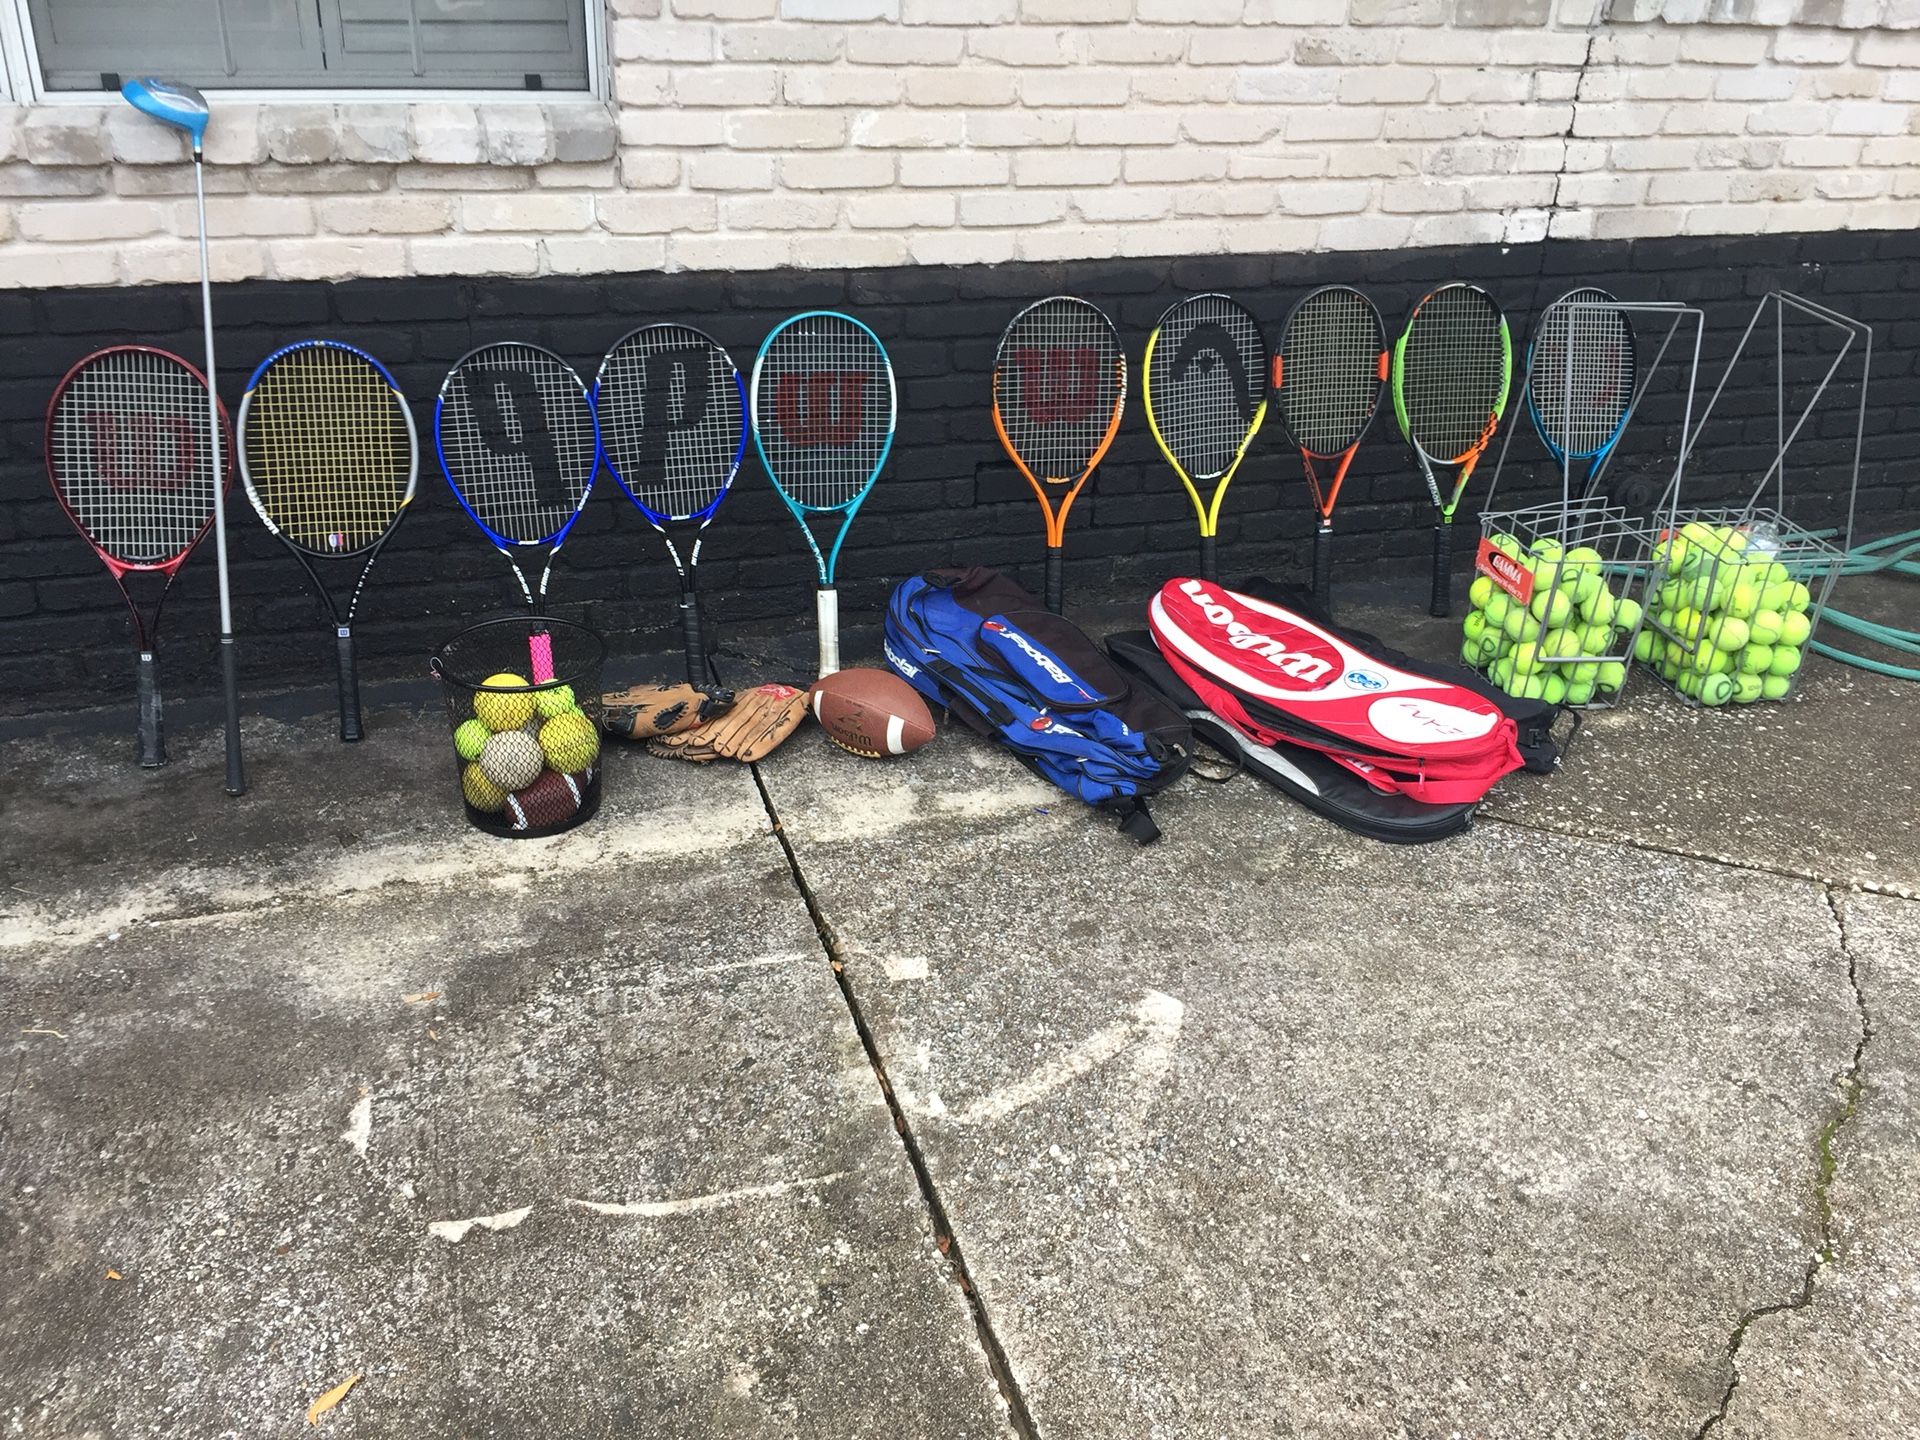 Tennis rackets,balls,carrier and bags